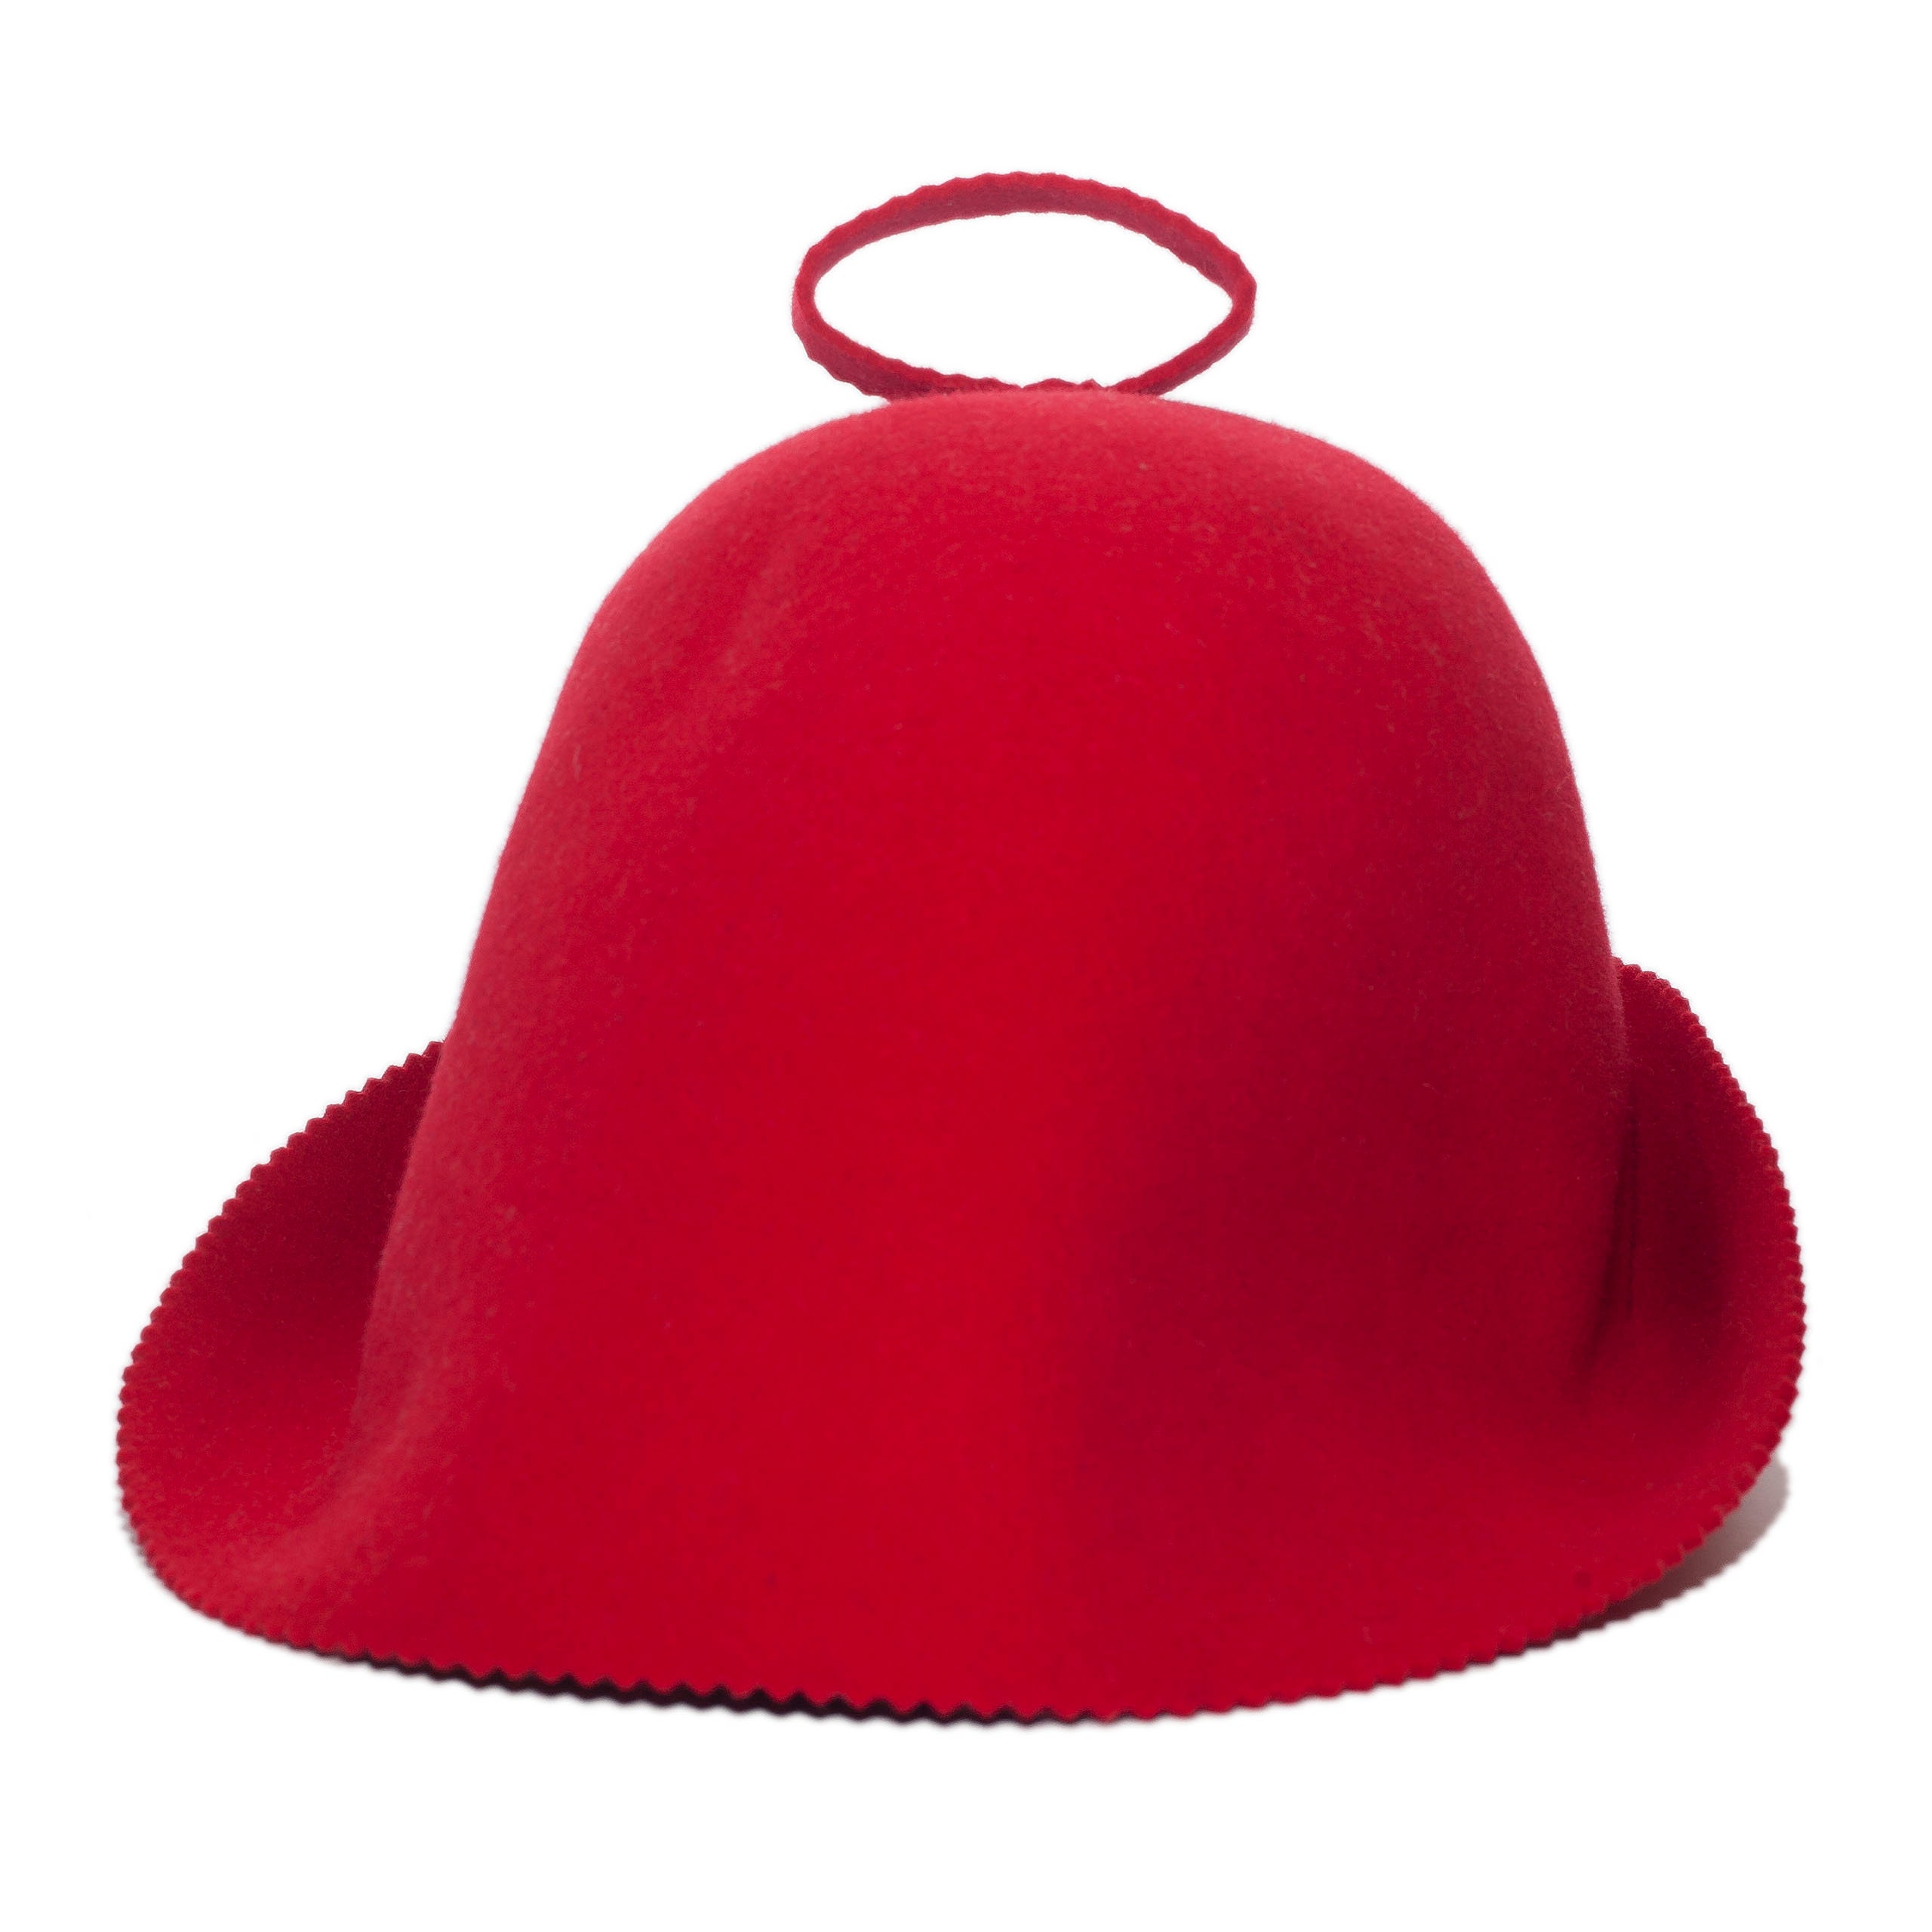 SAUNA Cap RED Hat Handmade in Poland Colors 100% Wool Bath pic